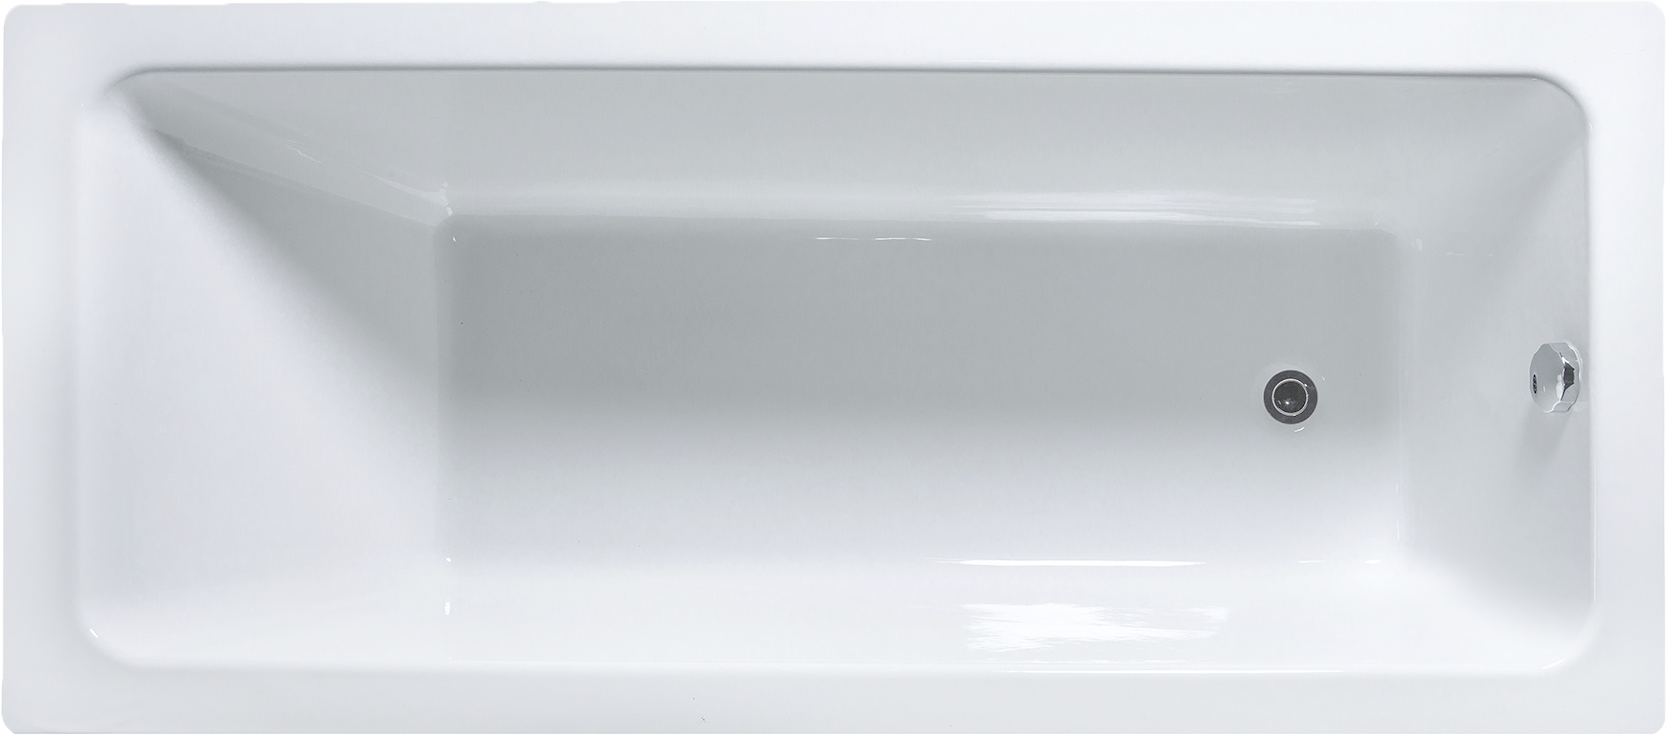 Чугунная ванна DIWO Суздаль Премиум 170x80 566243 - 7